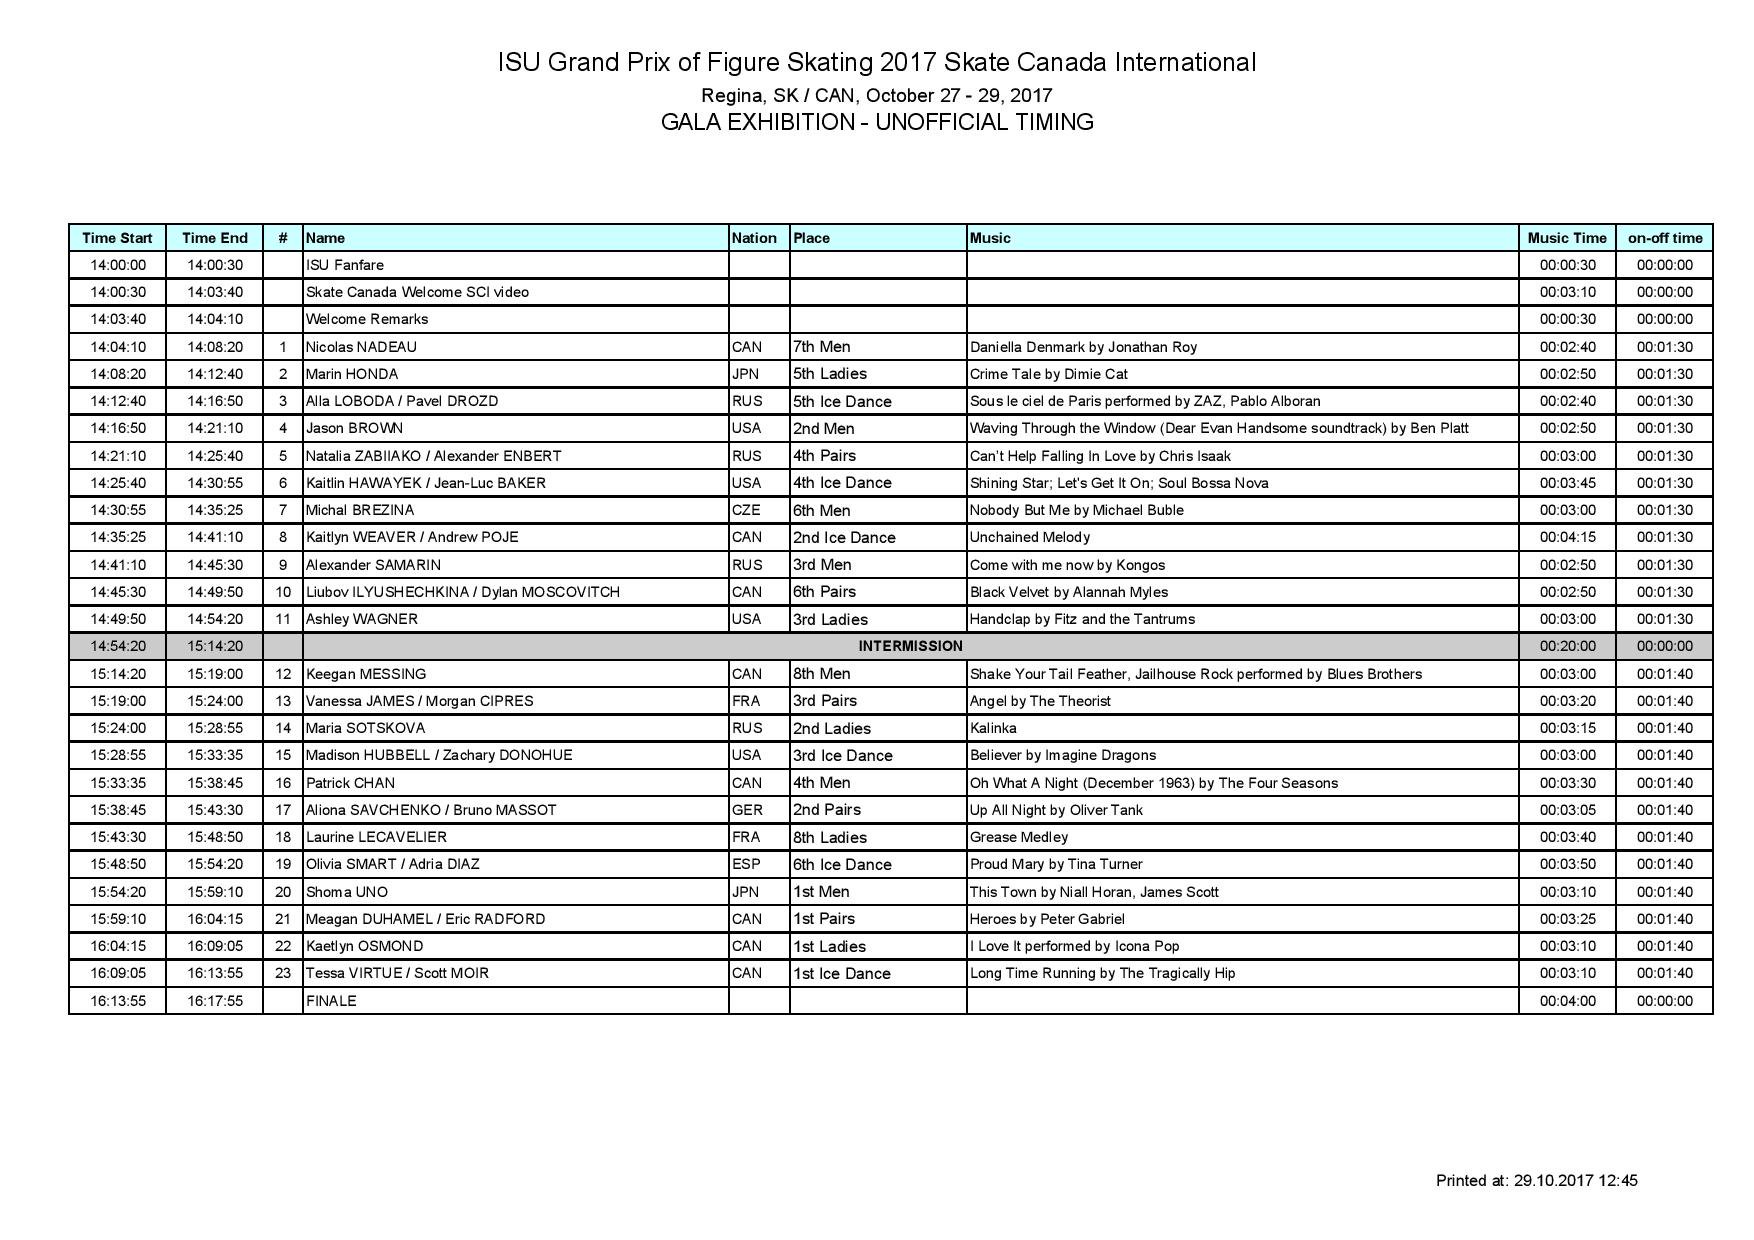 GP - 2 этап.  27 - 29 Oct 2017 Skate Canada International, Regina Canada  - Страница 39 DNU8fkmX0AEBxE6